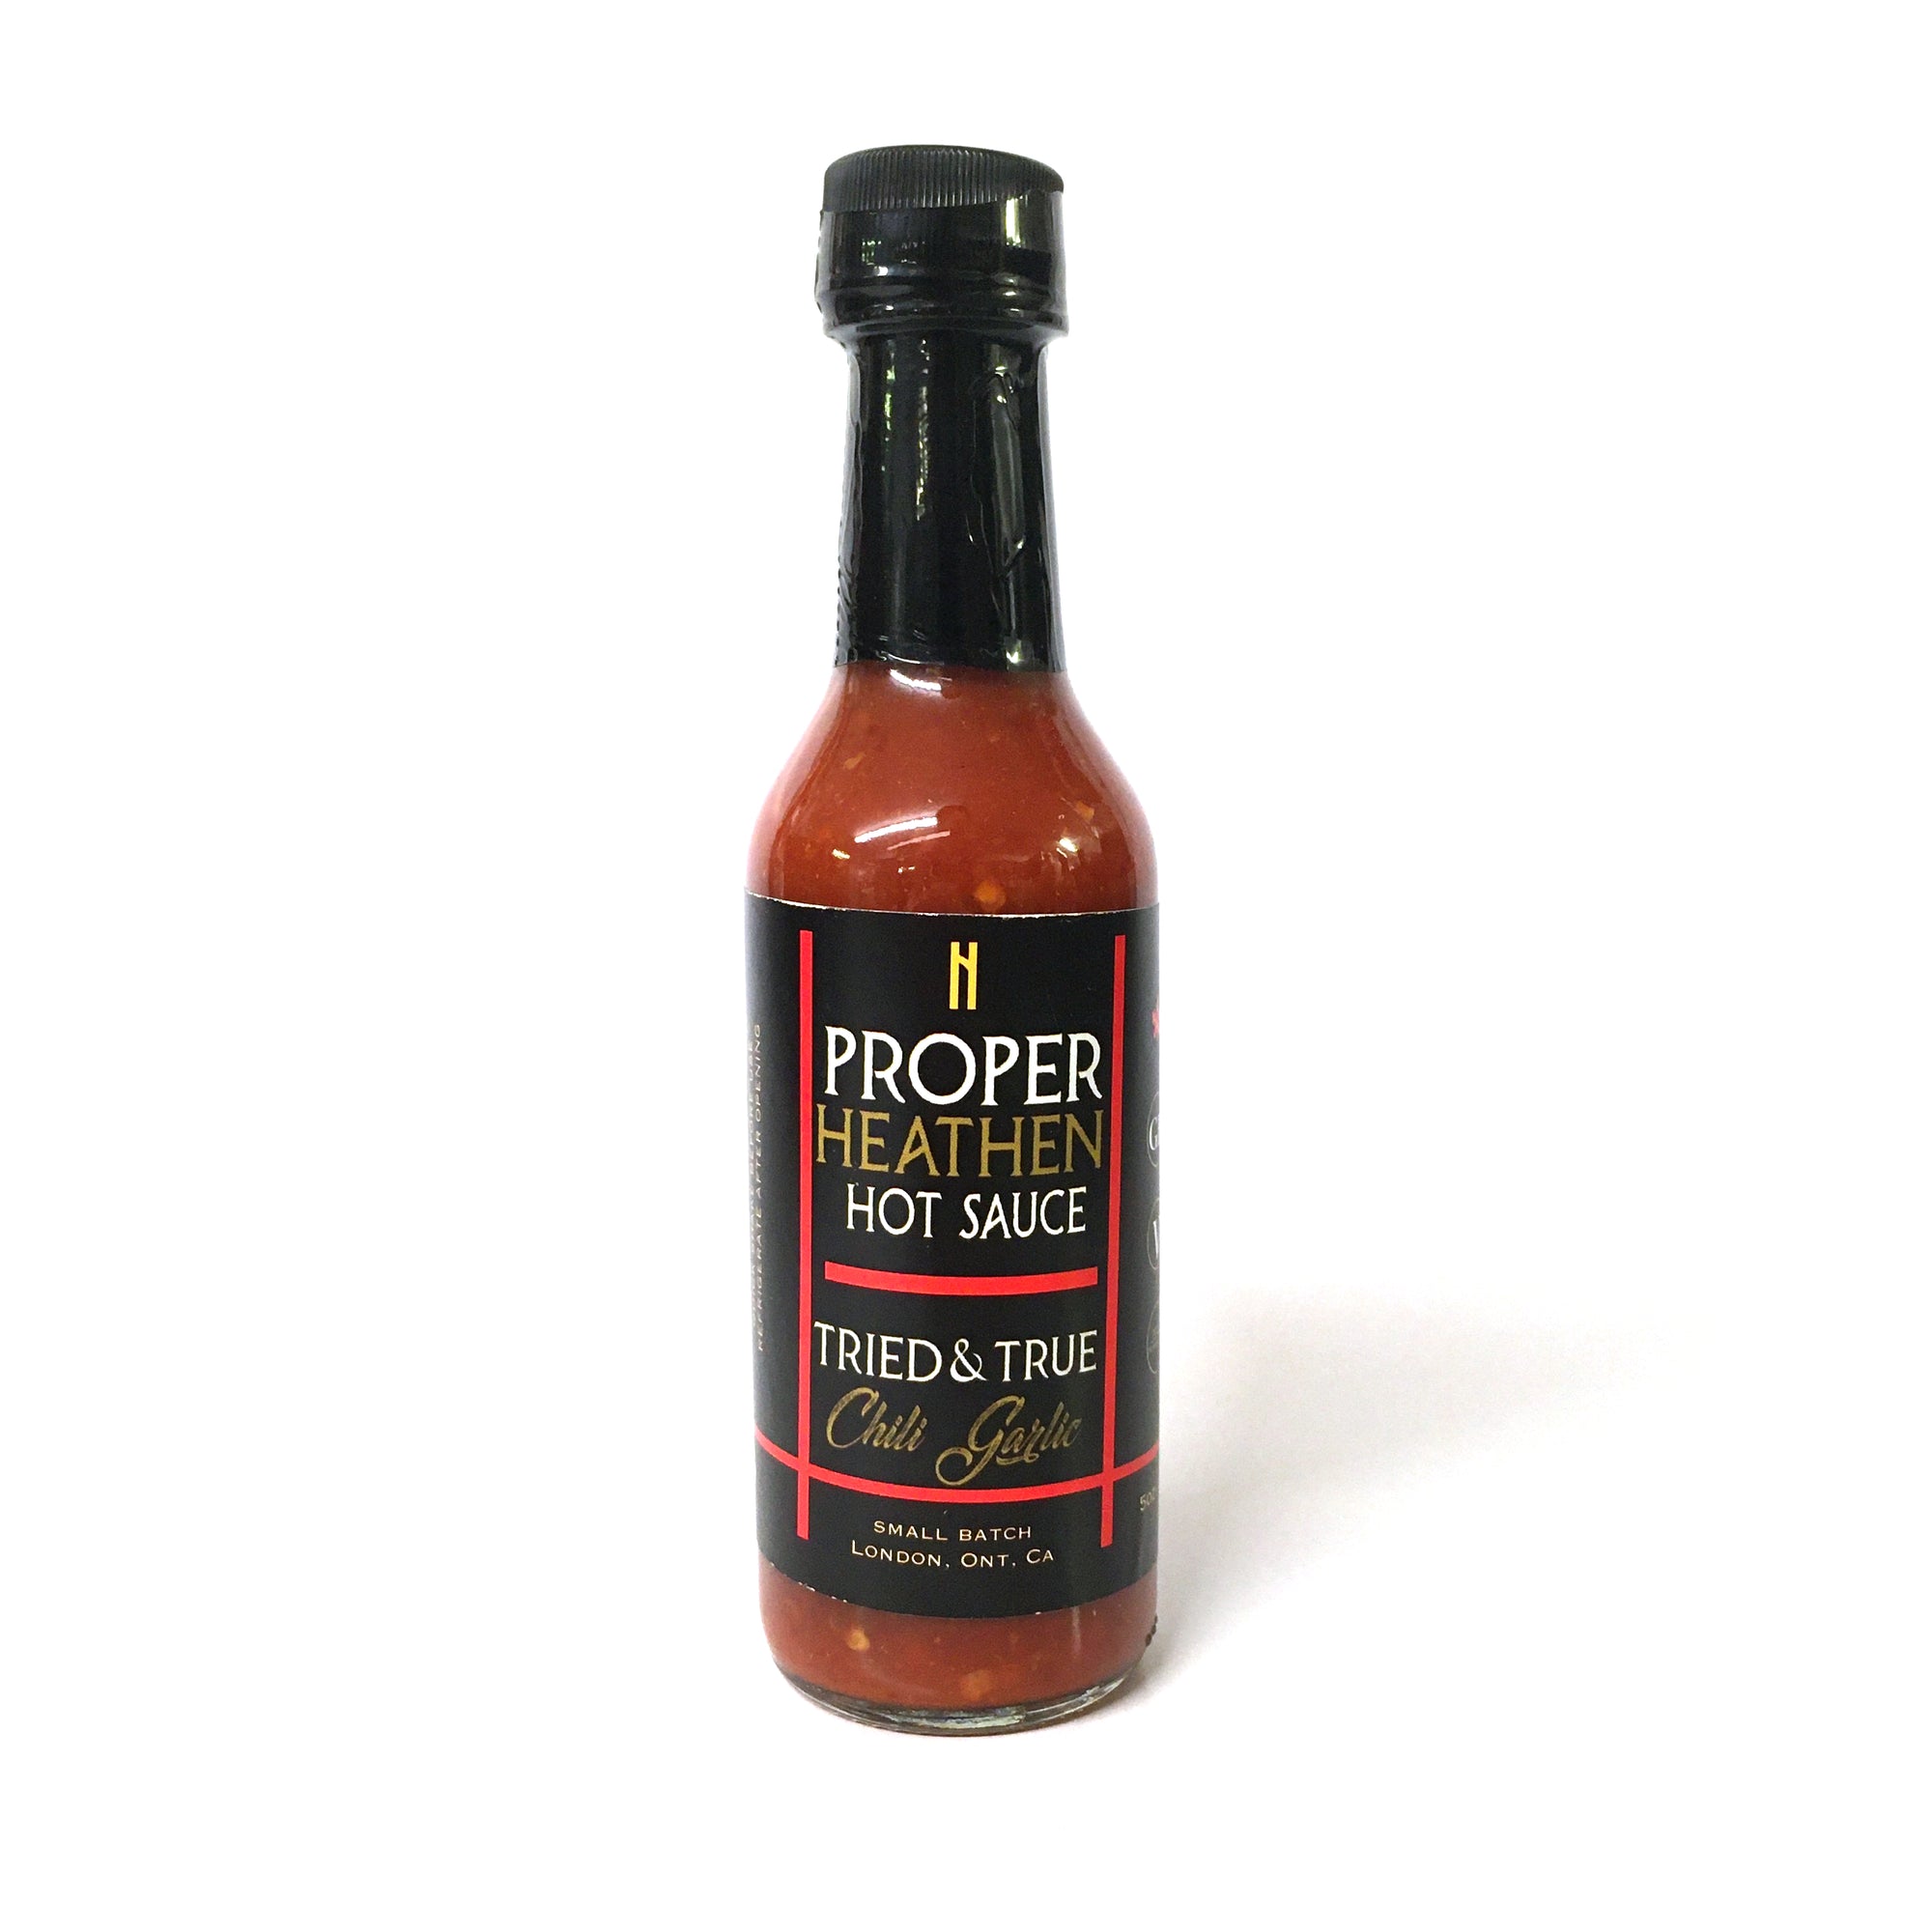 Proper Heathen Hot Sauce Tried & True - 148ml